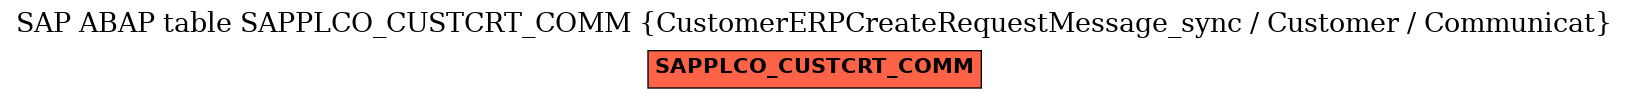 E-R Diagram for table SAPPLCO_CUSTCRT_COMM (CustomerERPCreateRequestMessage_sync / Customer / Communicat)